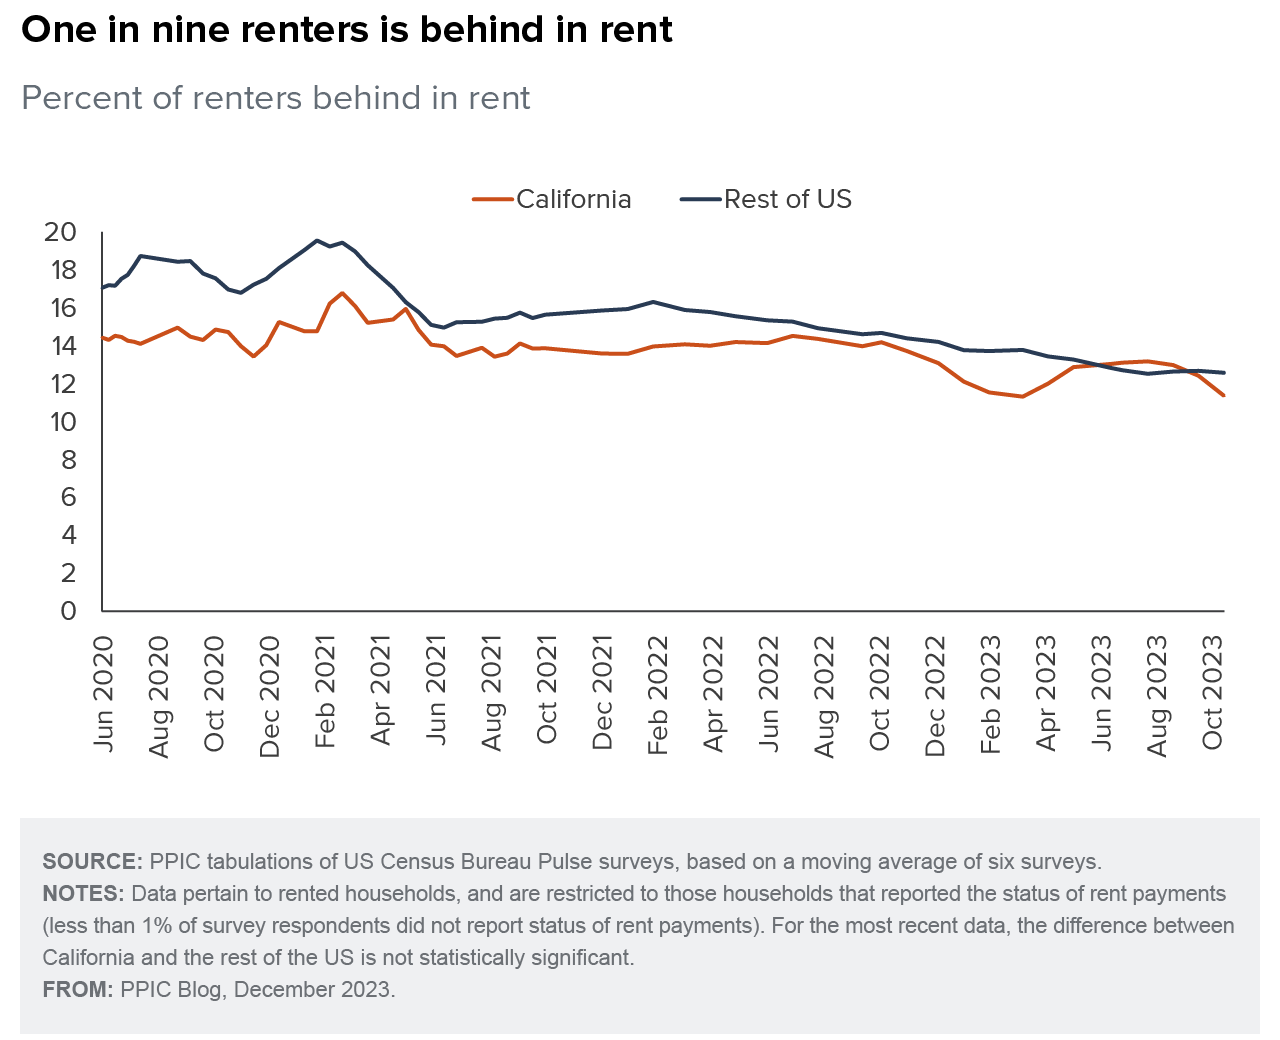 figure - One in nine renters is behind in rent 